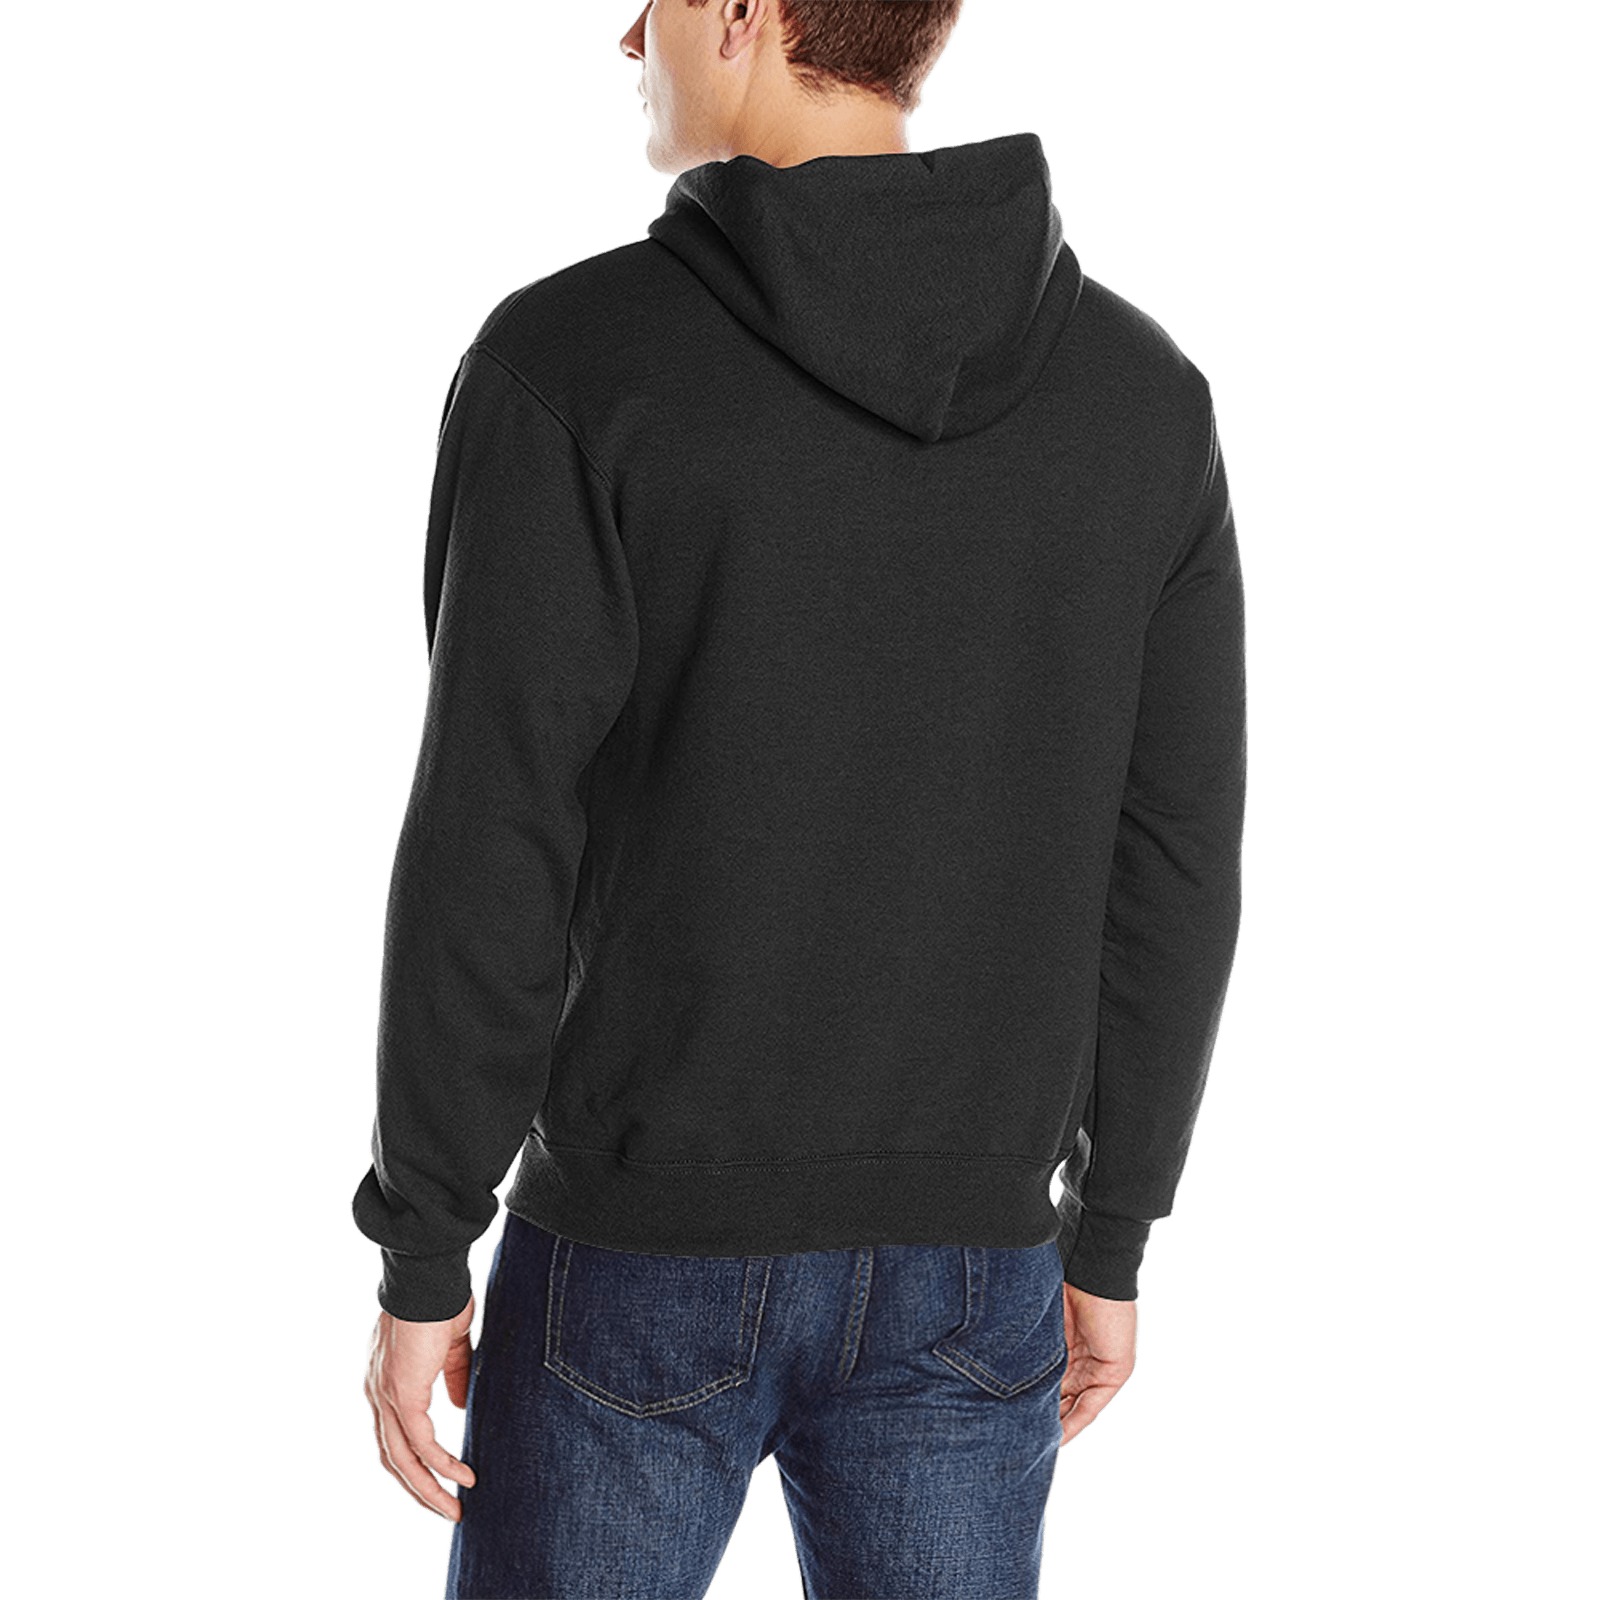 Las Vegas Dice on Black Heavy Blend Hooded Sweatshirt